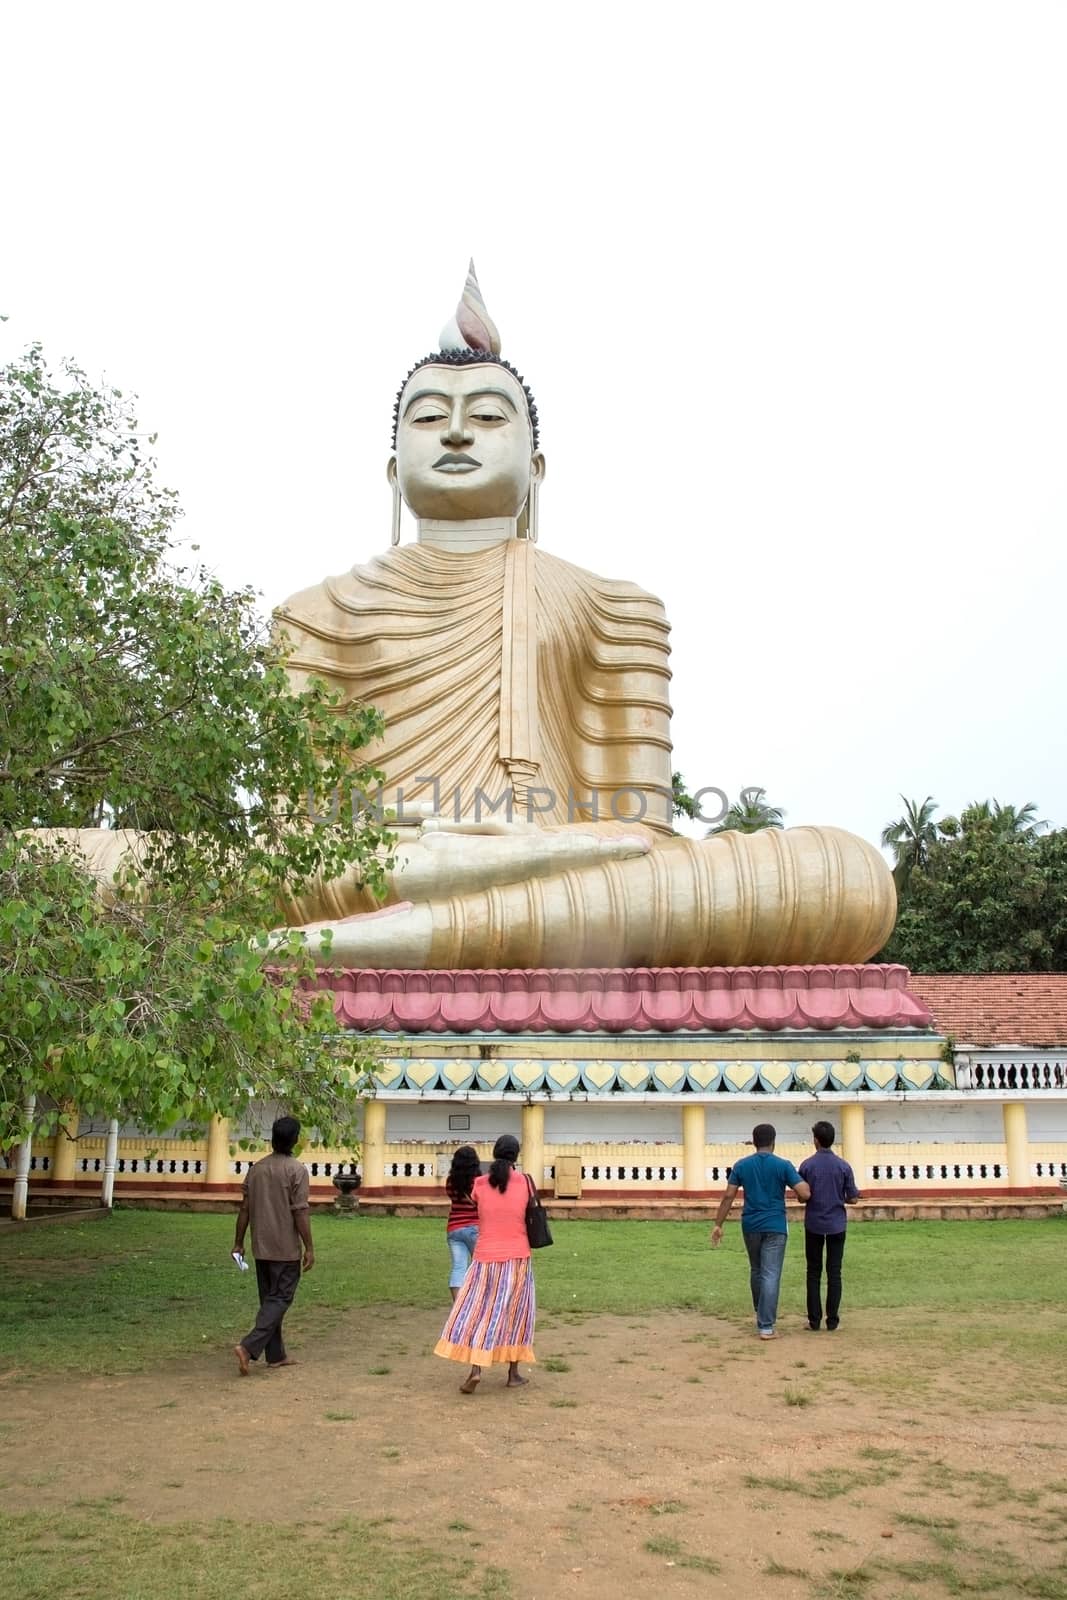 DICKWELLA, SOUTHERN PROVINCE, SRI LANKA - DECEMBER 20 2014: Sri Lanka's largest seated Buddha statue in Dickwella is 50 metres (160 ft) tall. Buddha and statues in buddhist monastery Wewurukannala Vihara near Dikwella, Sri Lanka. Dickwella, Southern Province, Sri Lanka, Asia.